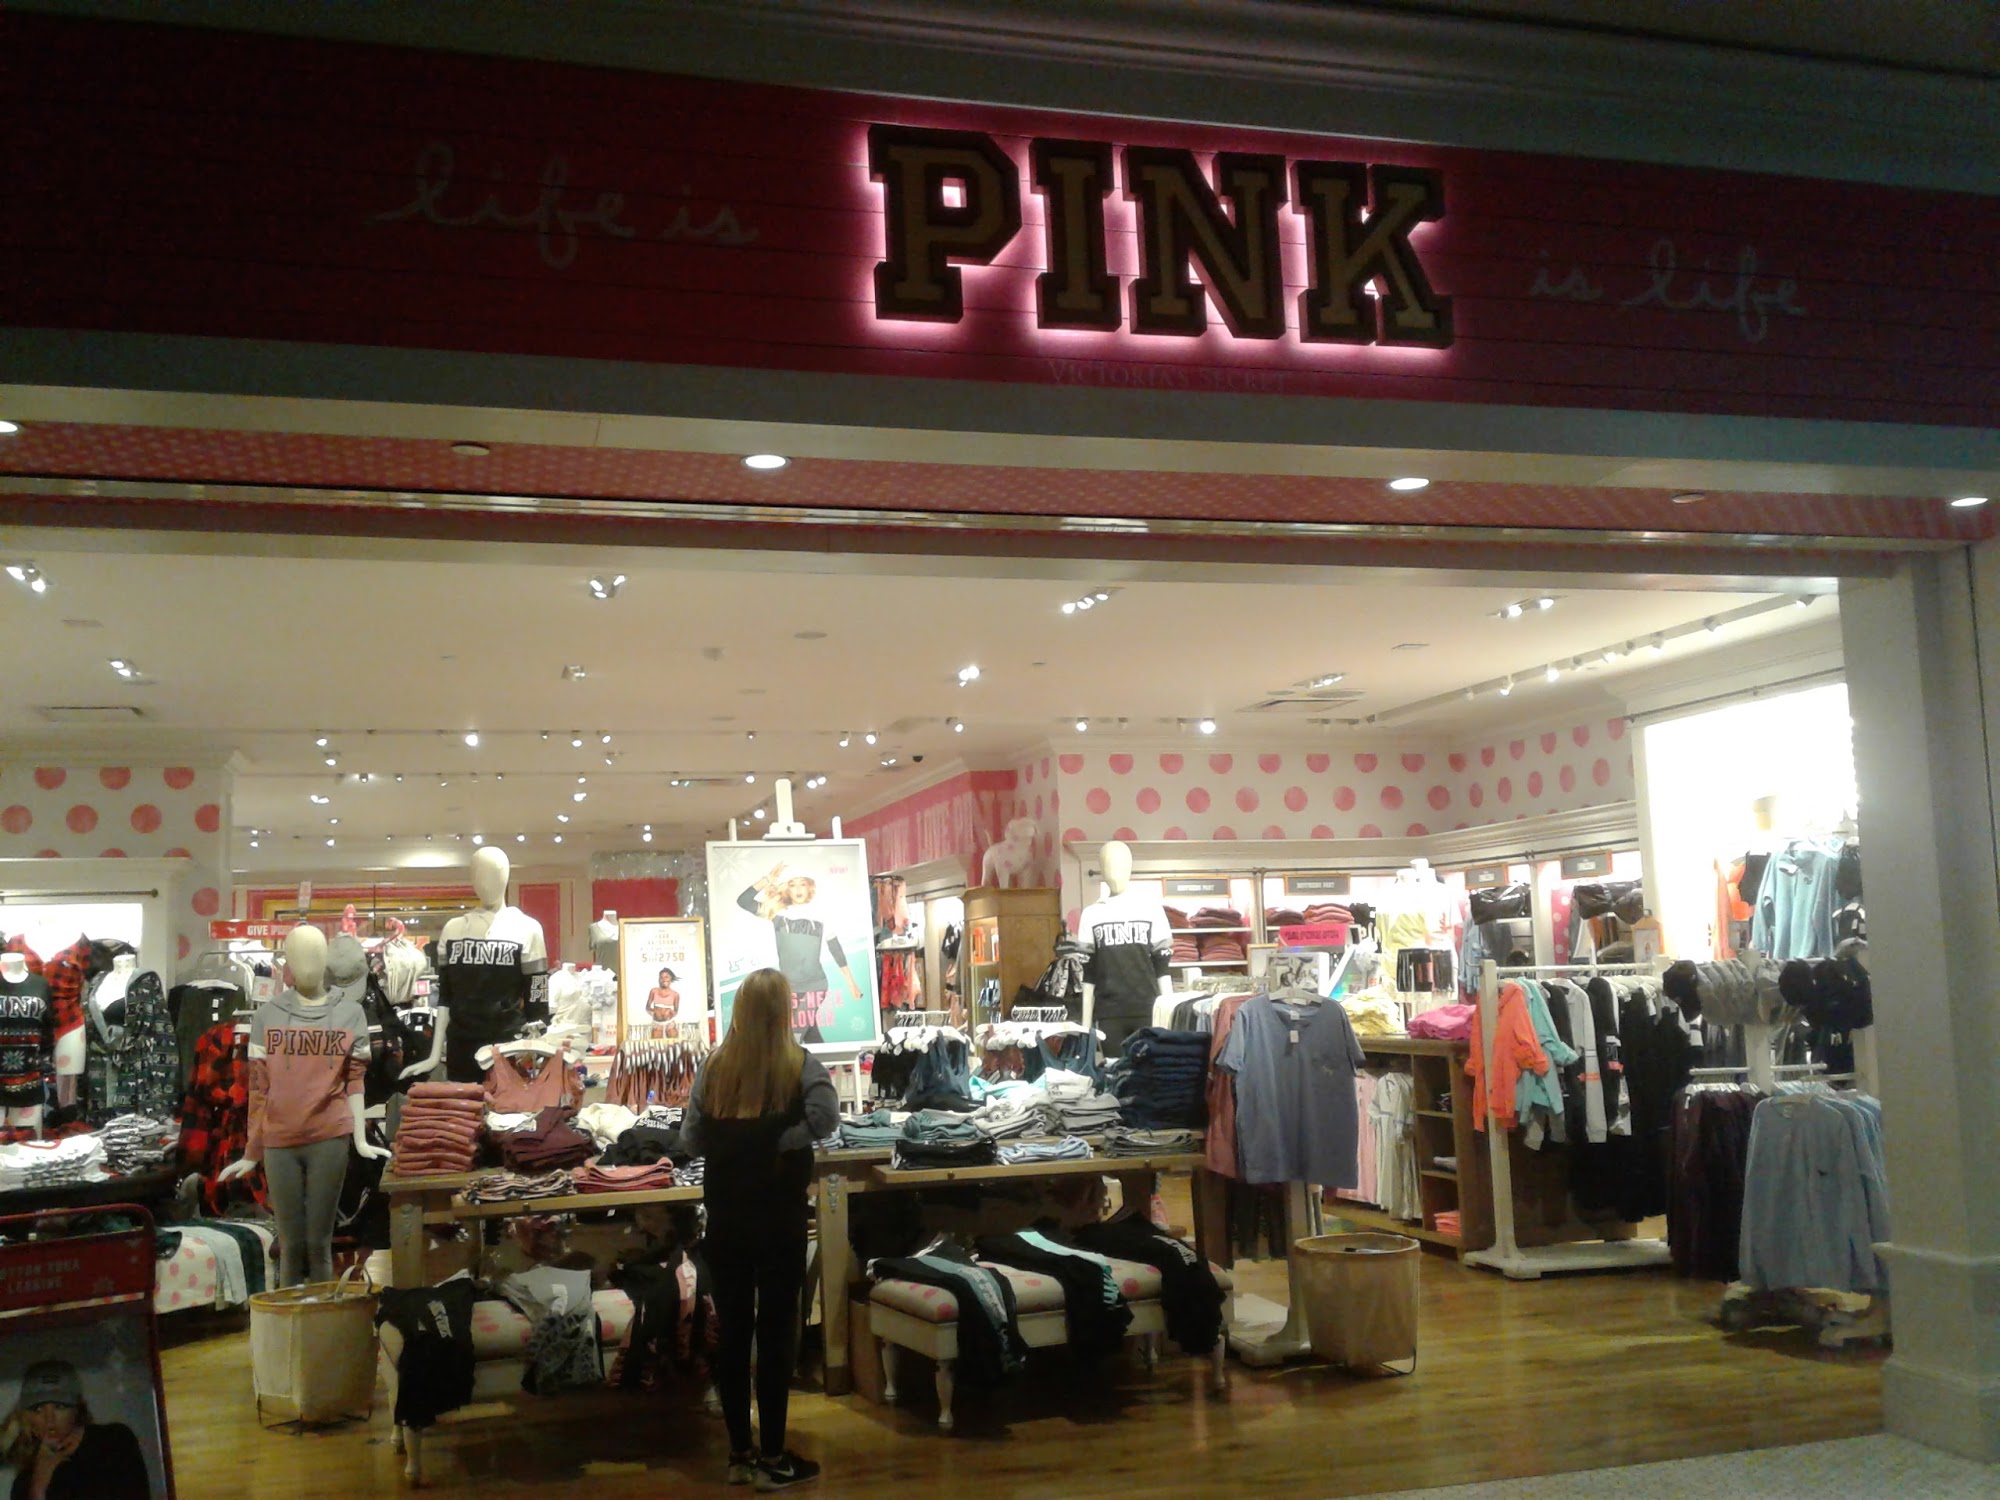 PINK by Victoria's Secret